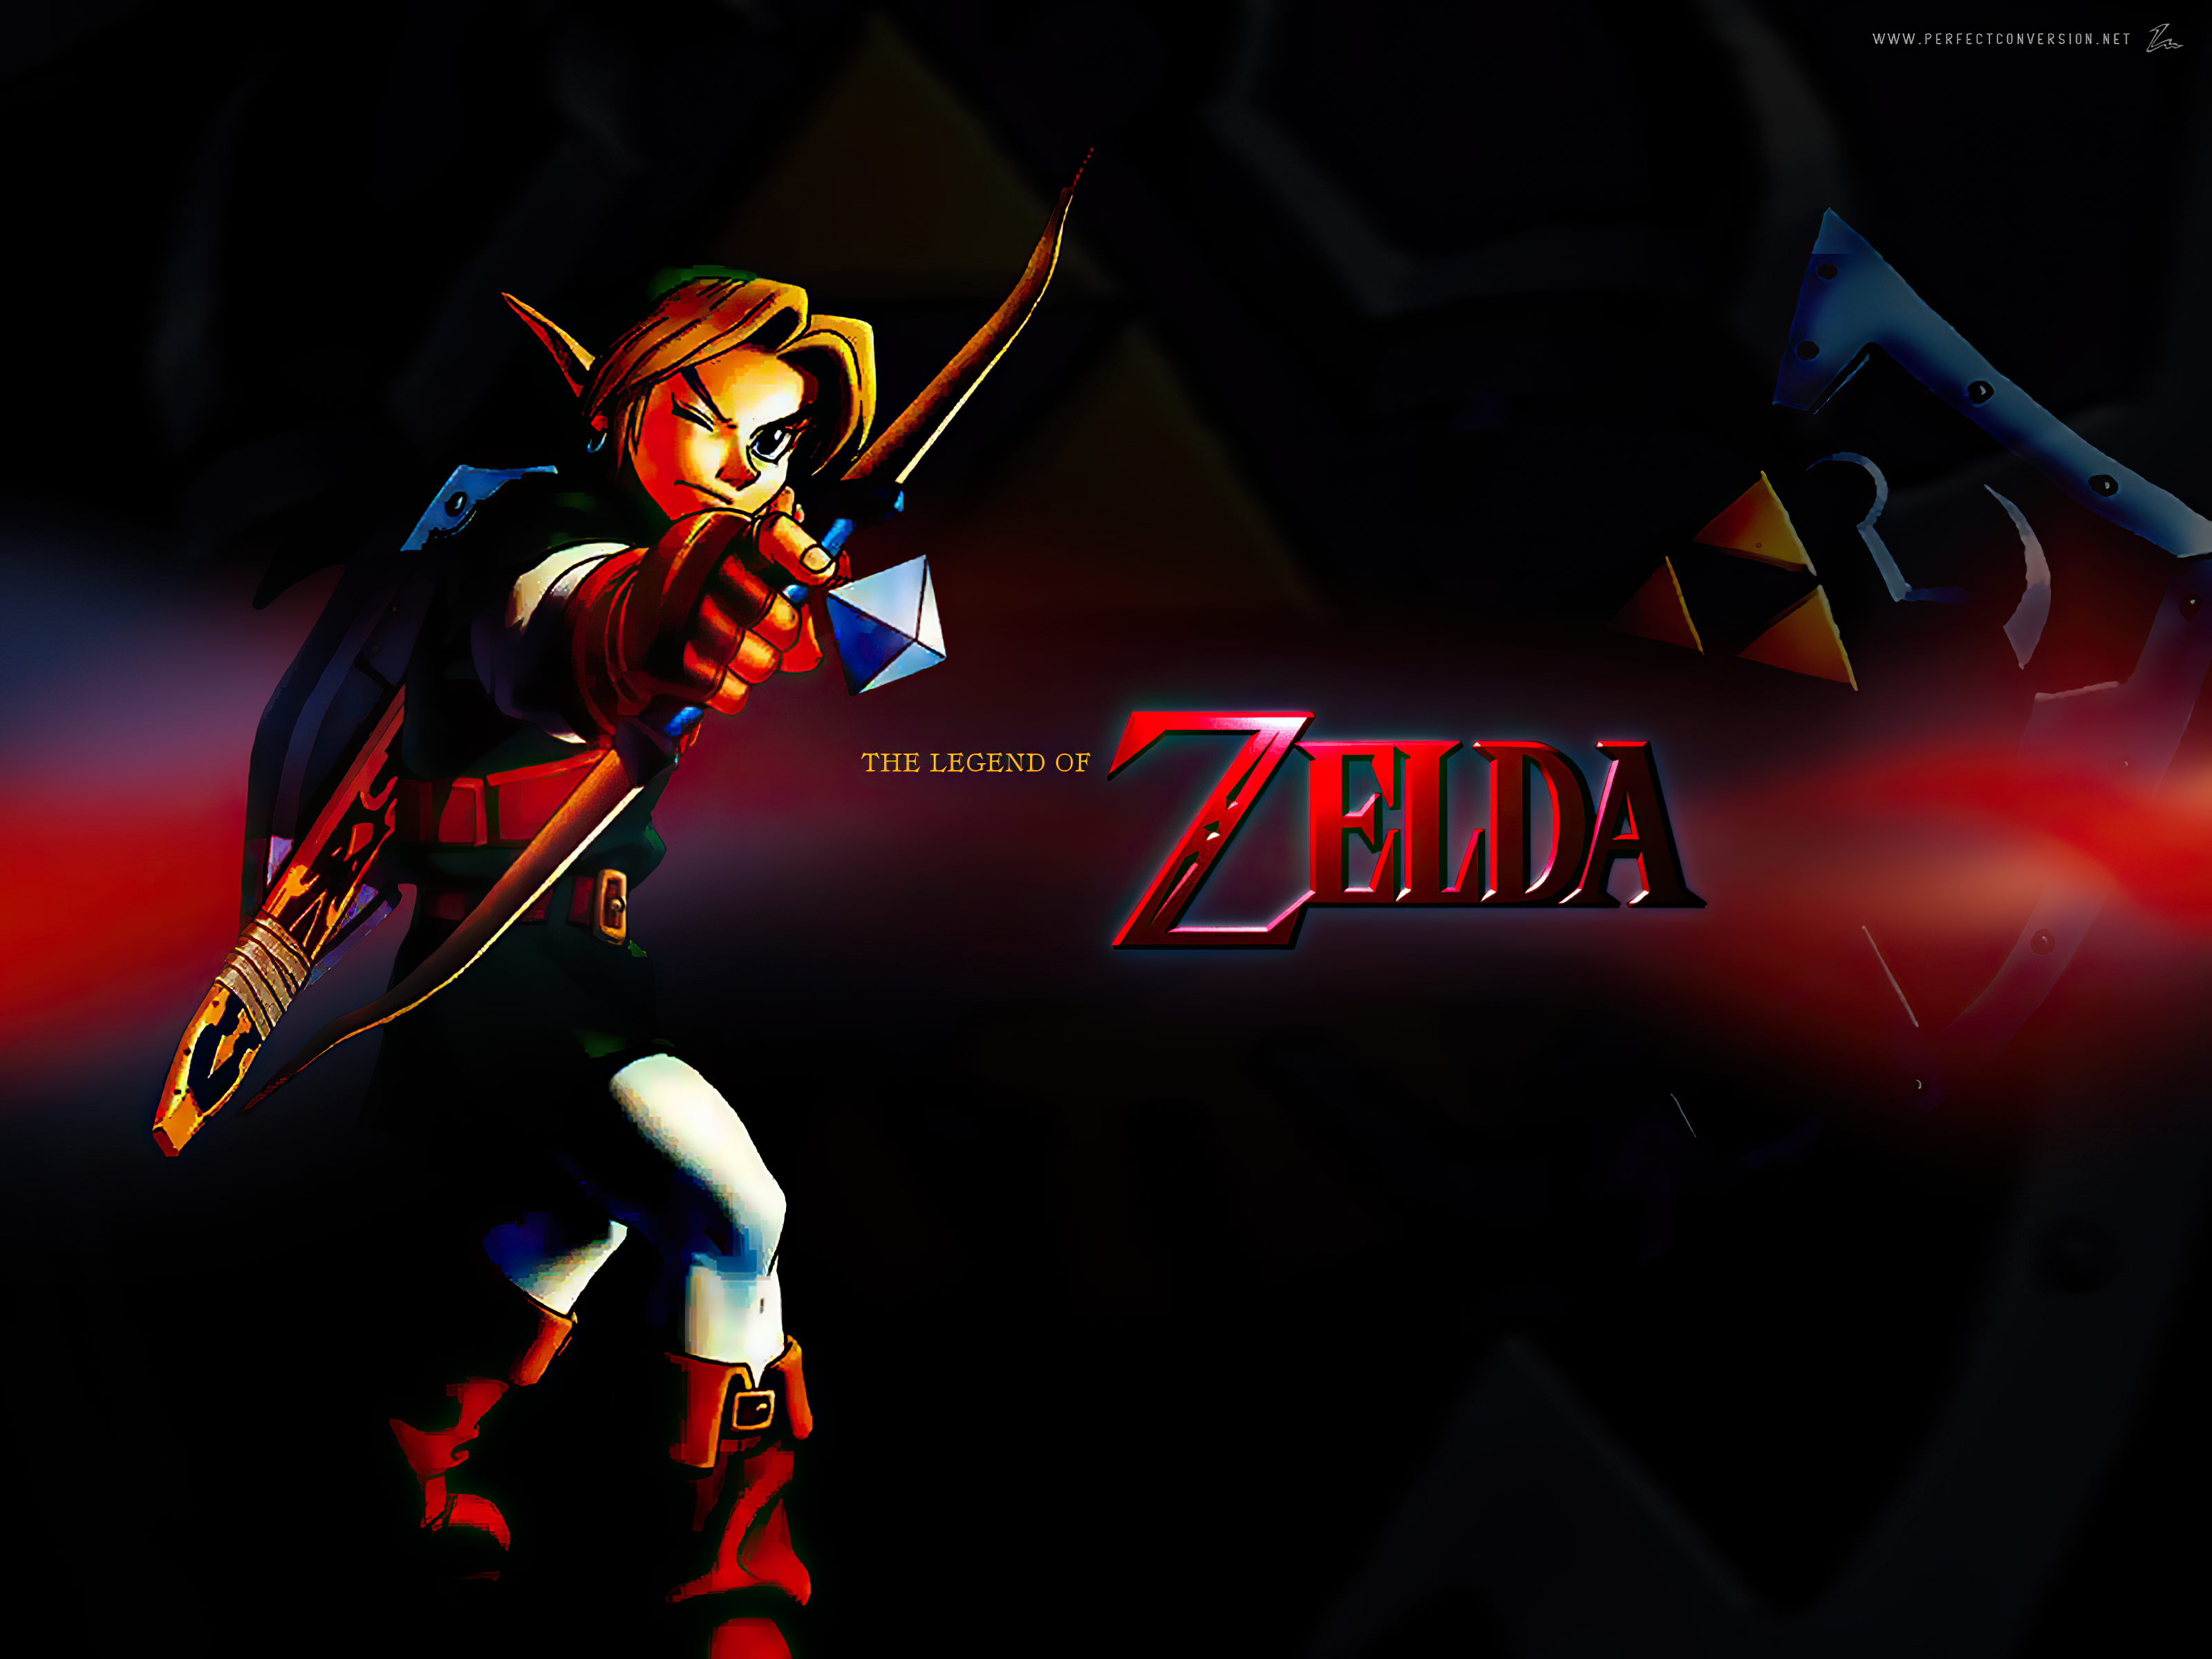 Desktop wallpaper featuring The Legend of Zelda: Ocarina of Time video game.